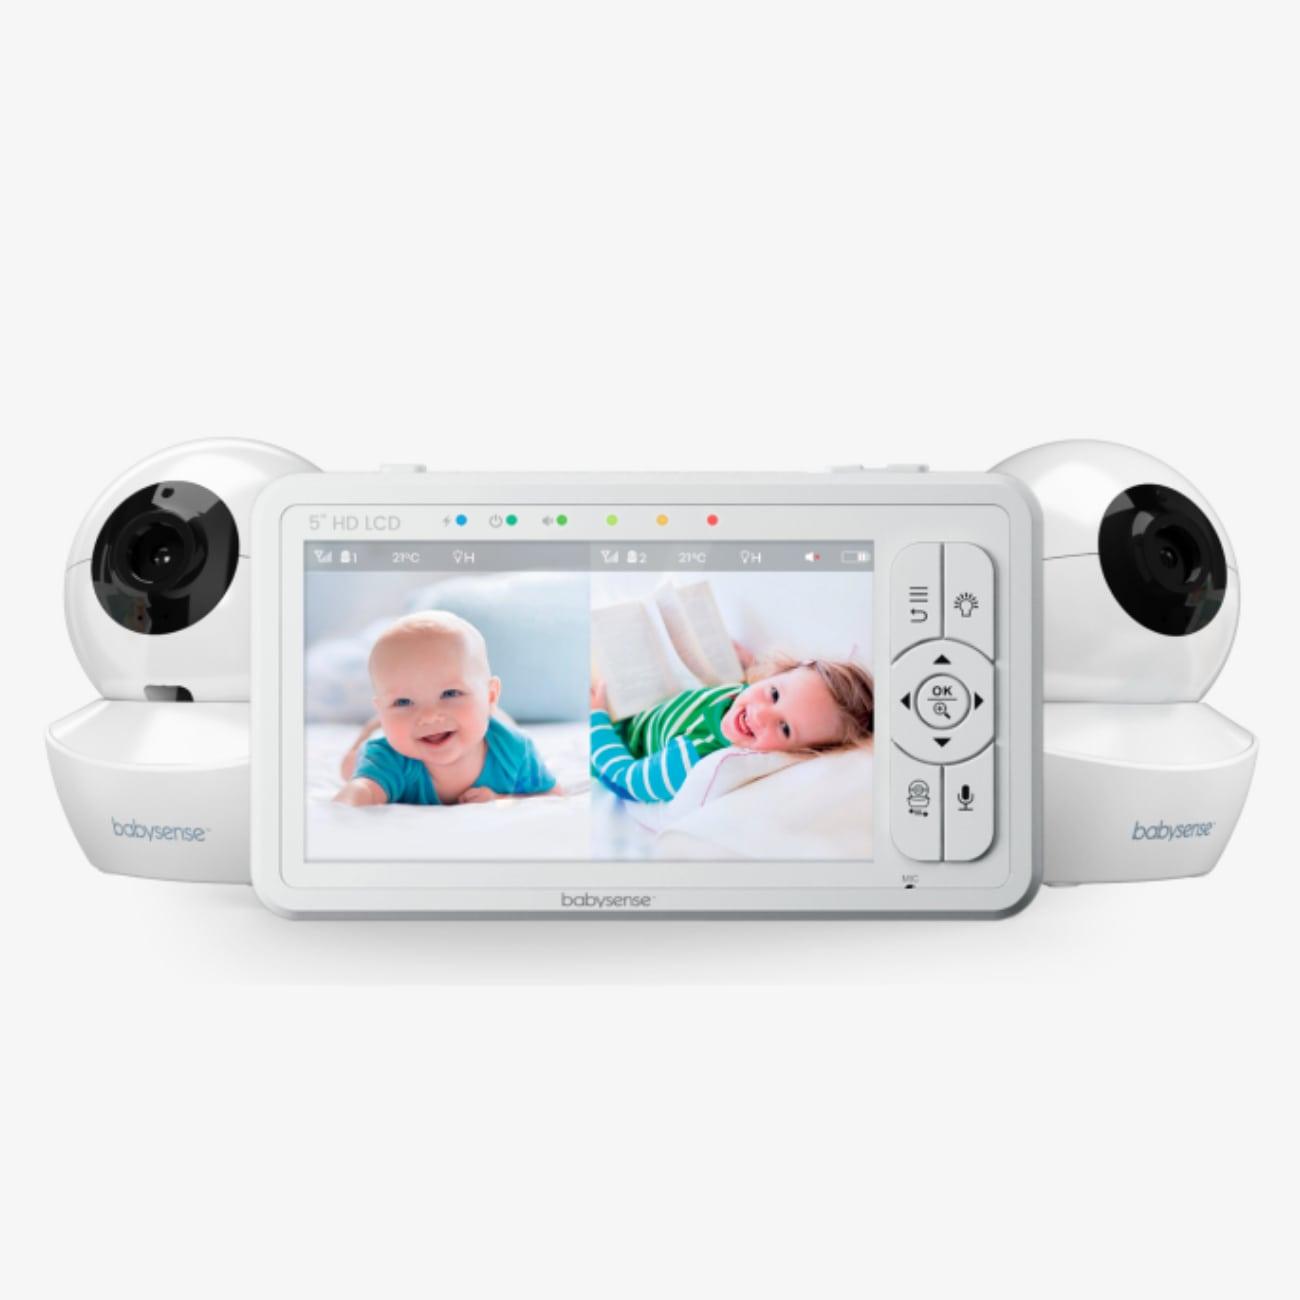 Babysense HI-V24US Digital Wireless Baby Video Camera ONLY NO